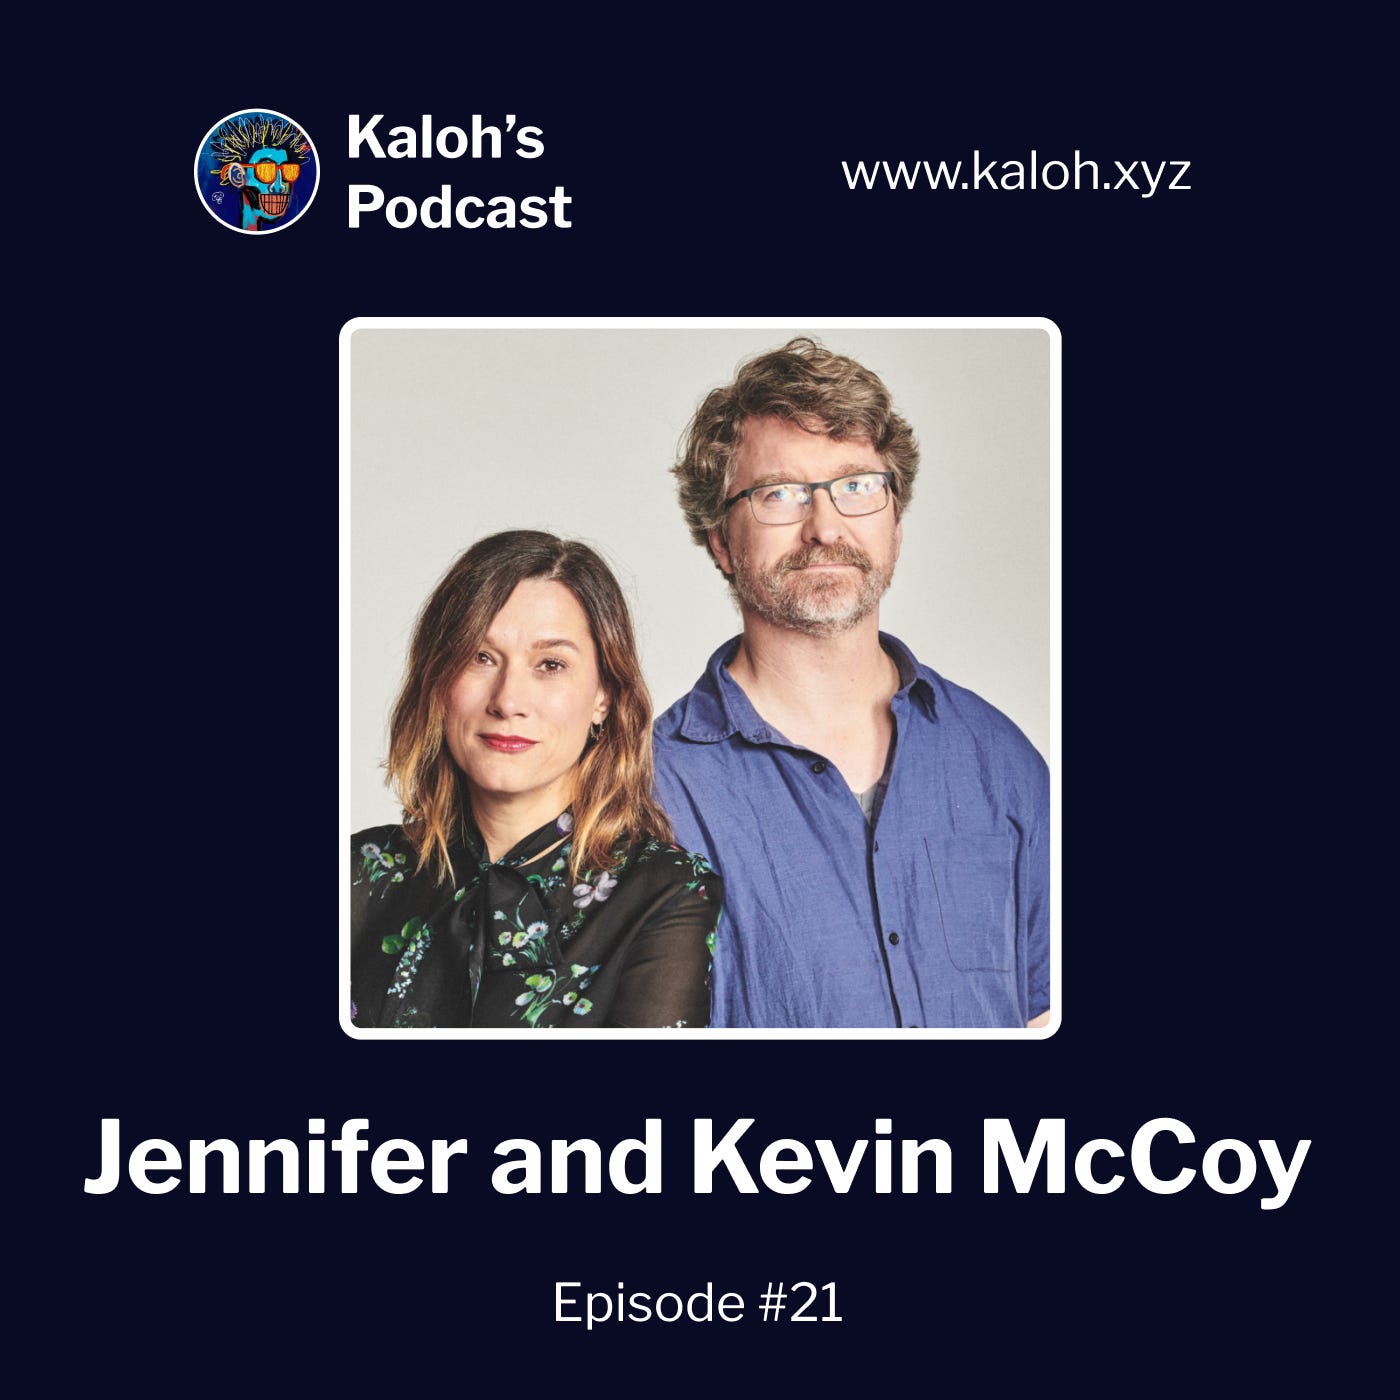 Kaloh’s Podcast Episode 21: Jennifer and Kevin McCoy.